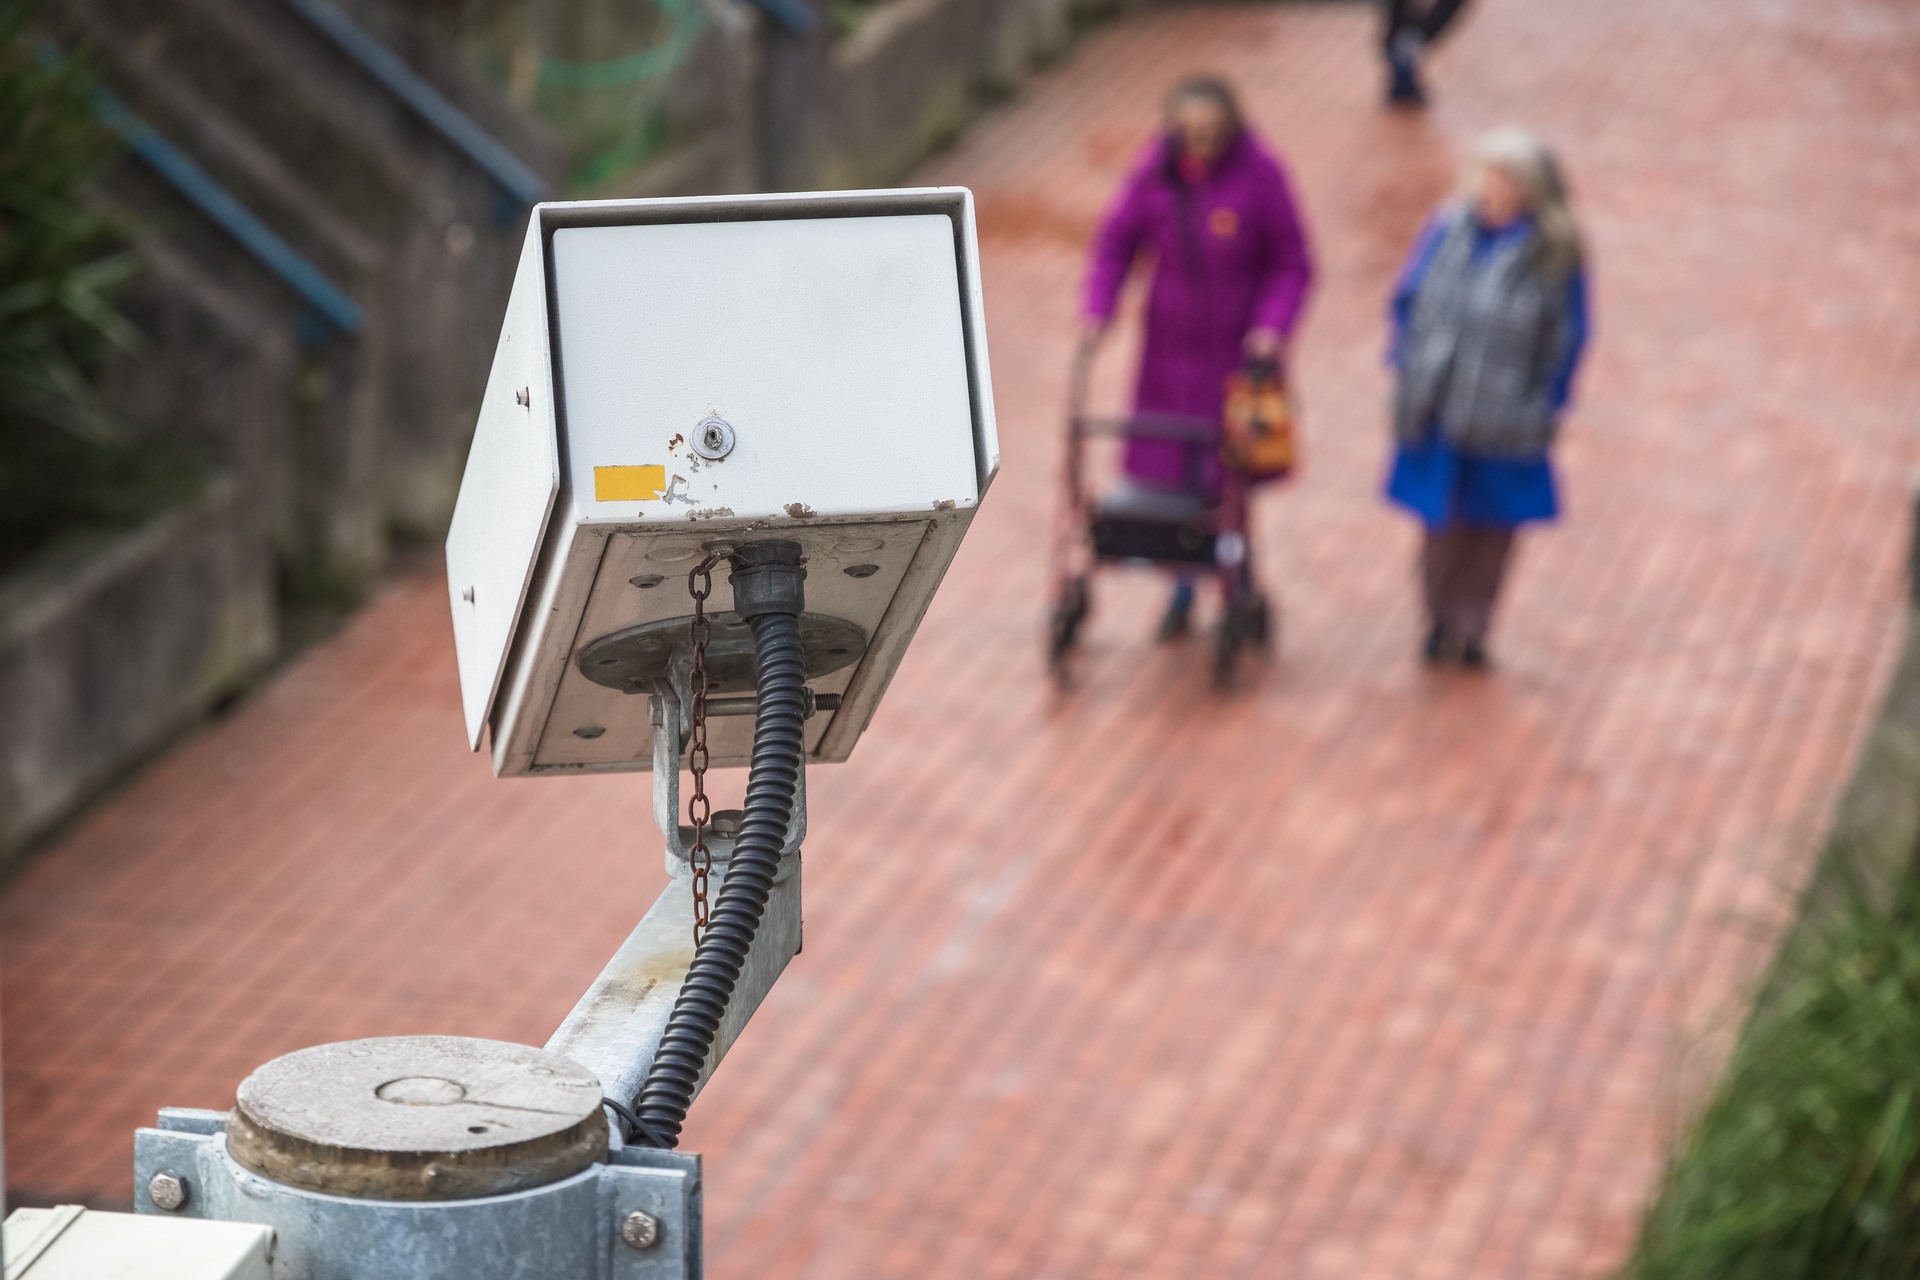 Surveillance cameras in public spaces: are they a good idea?